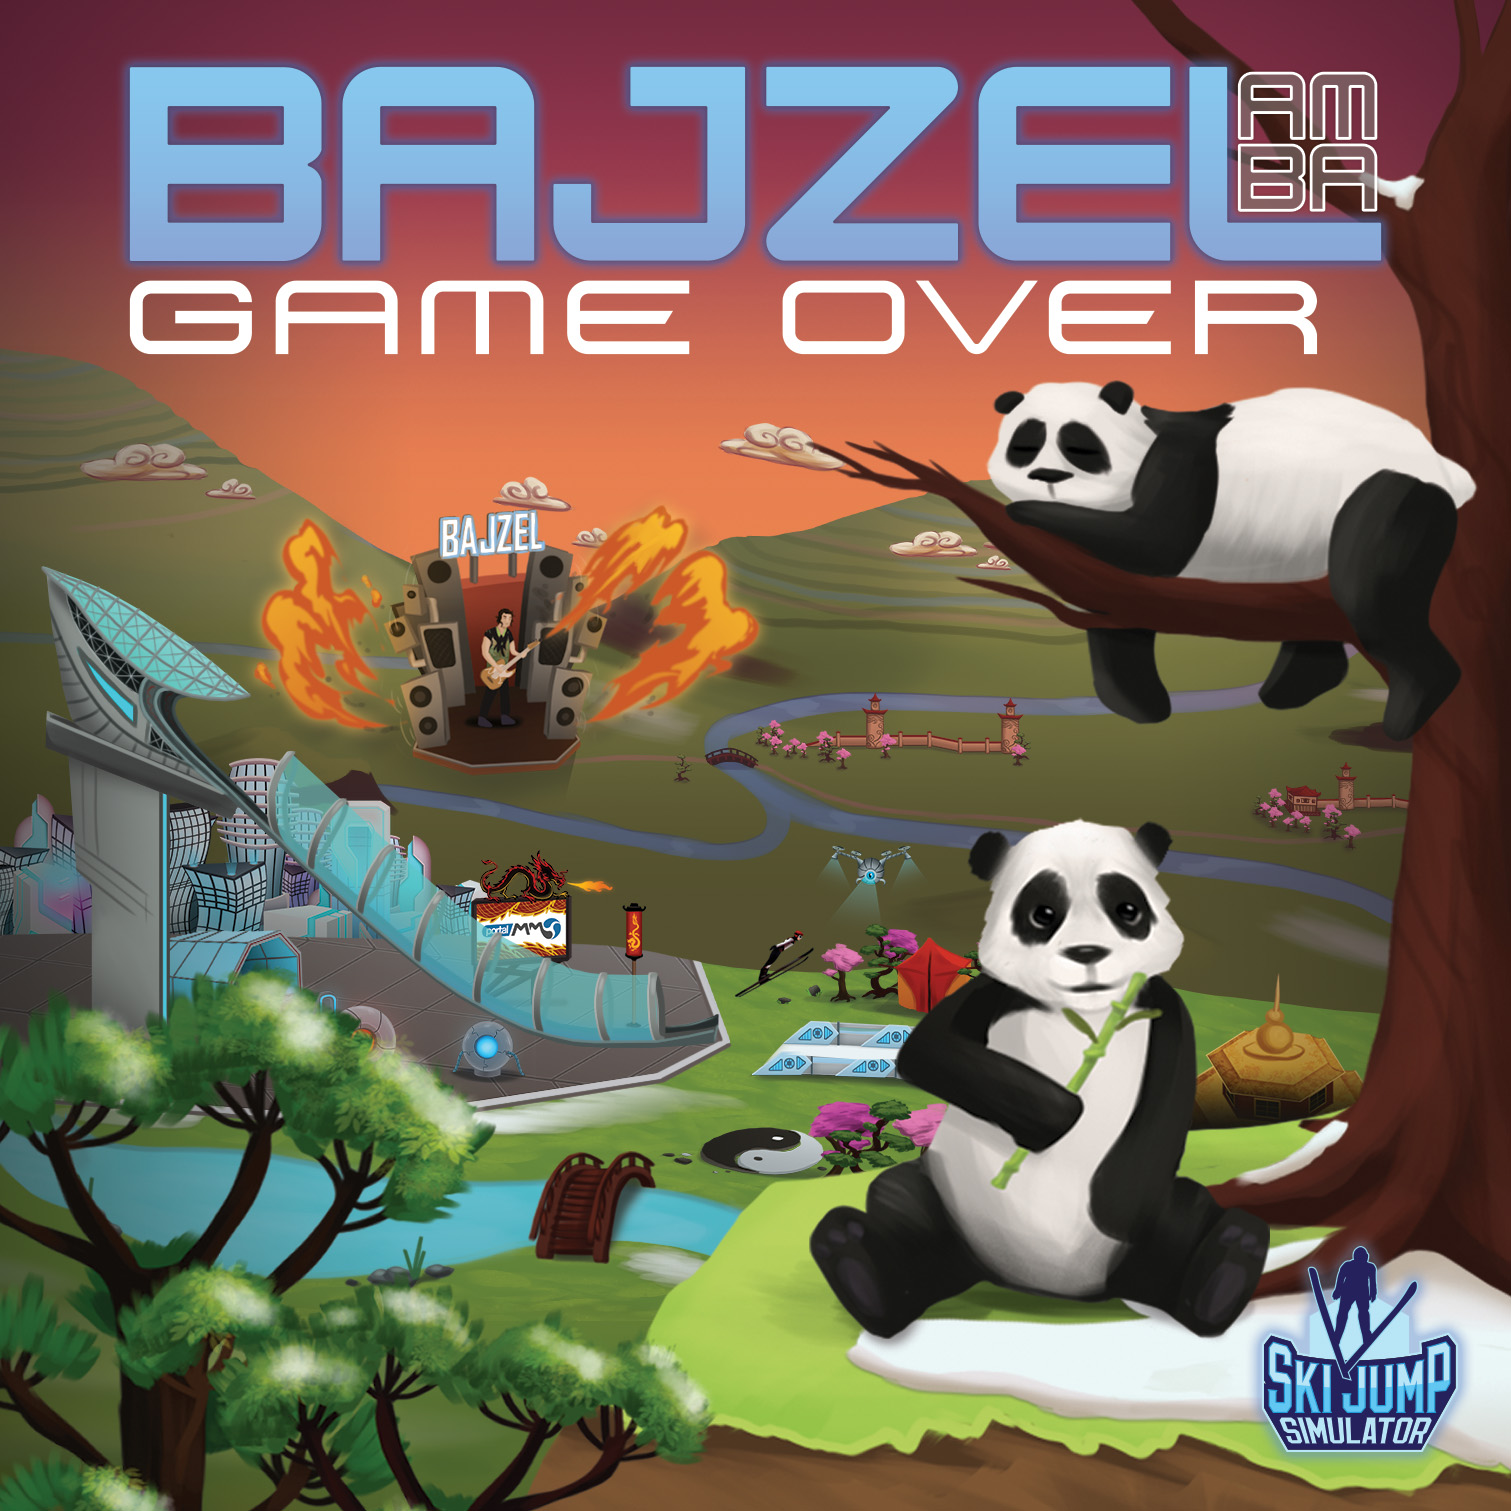 Bajzel & AMBA - Game Over - Ski Jump Simulator soundtrack